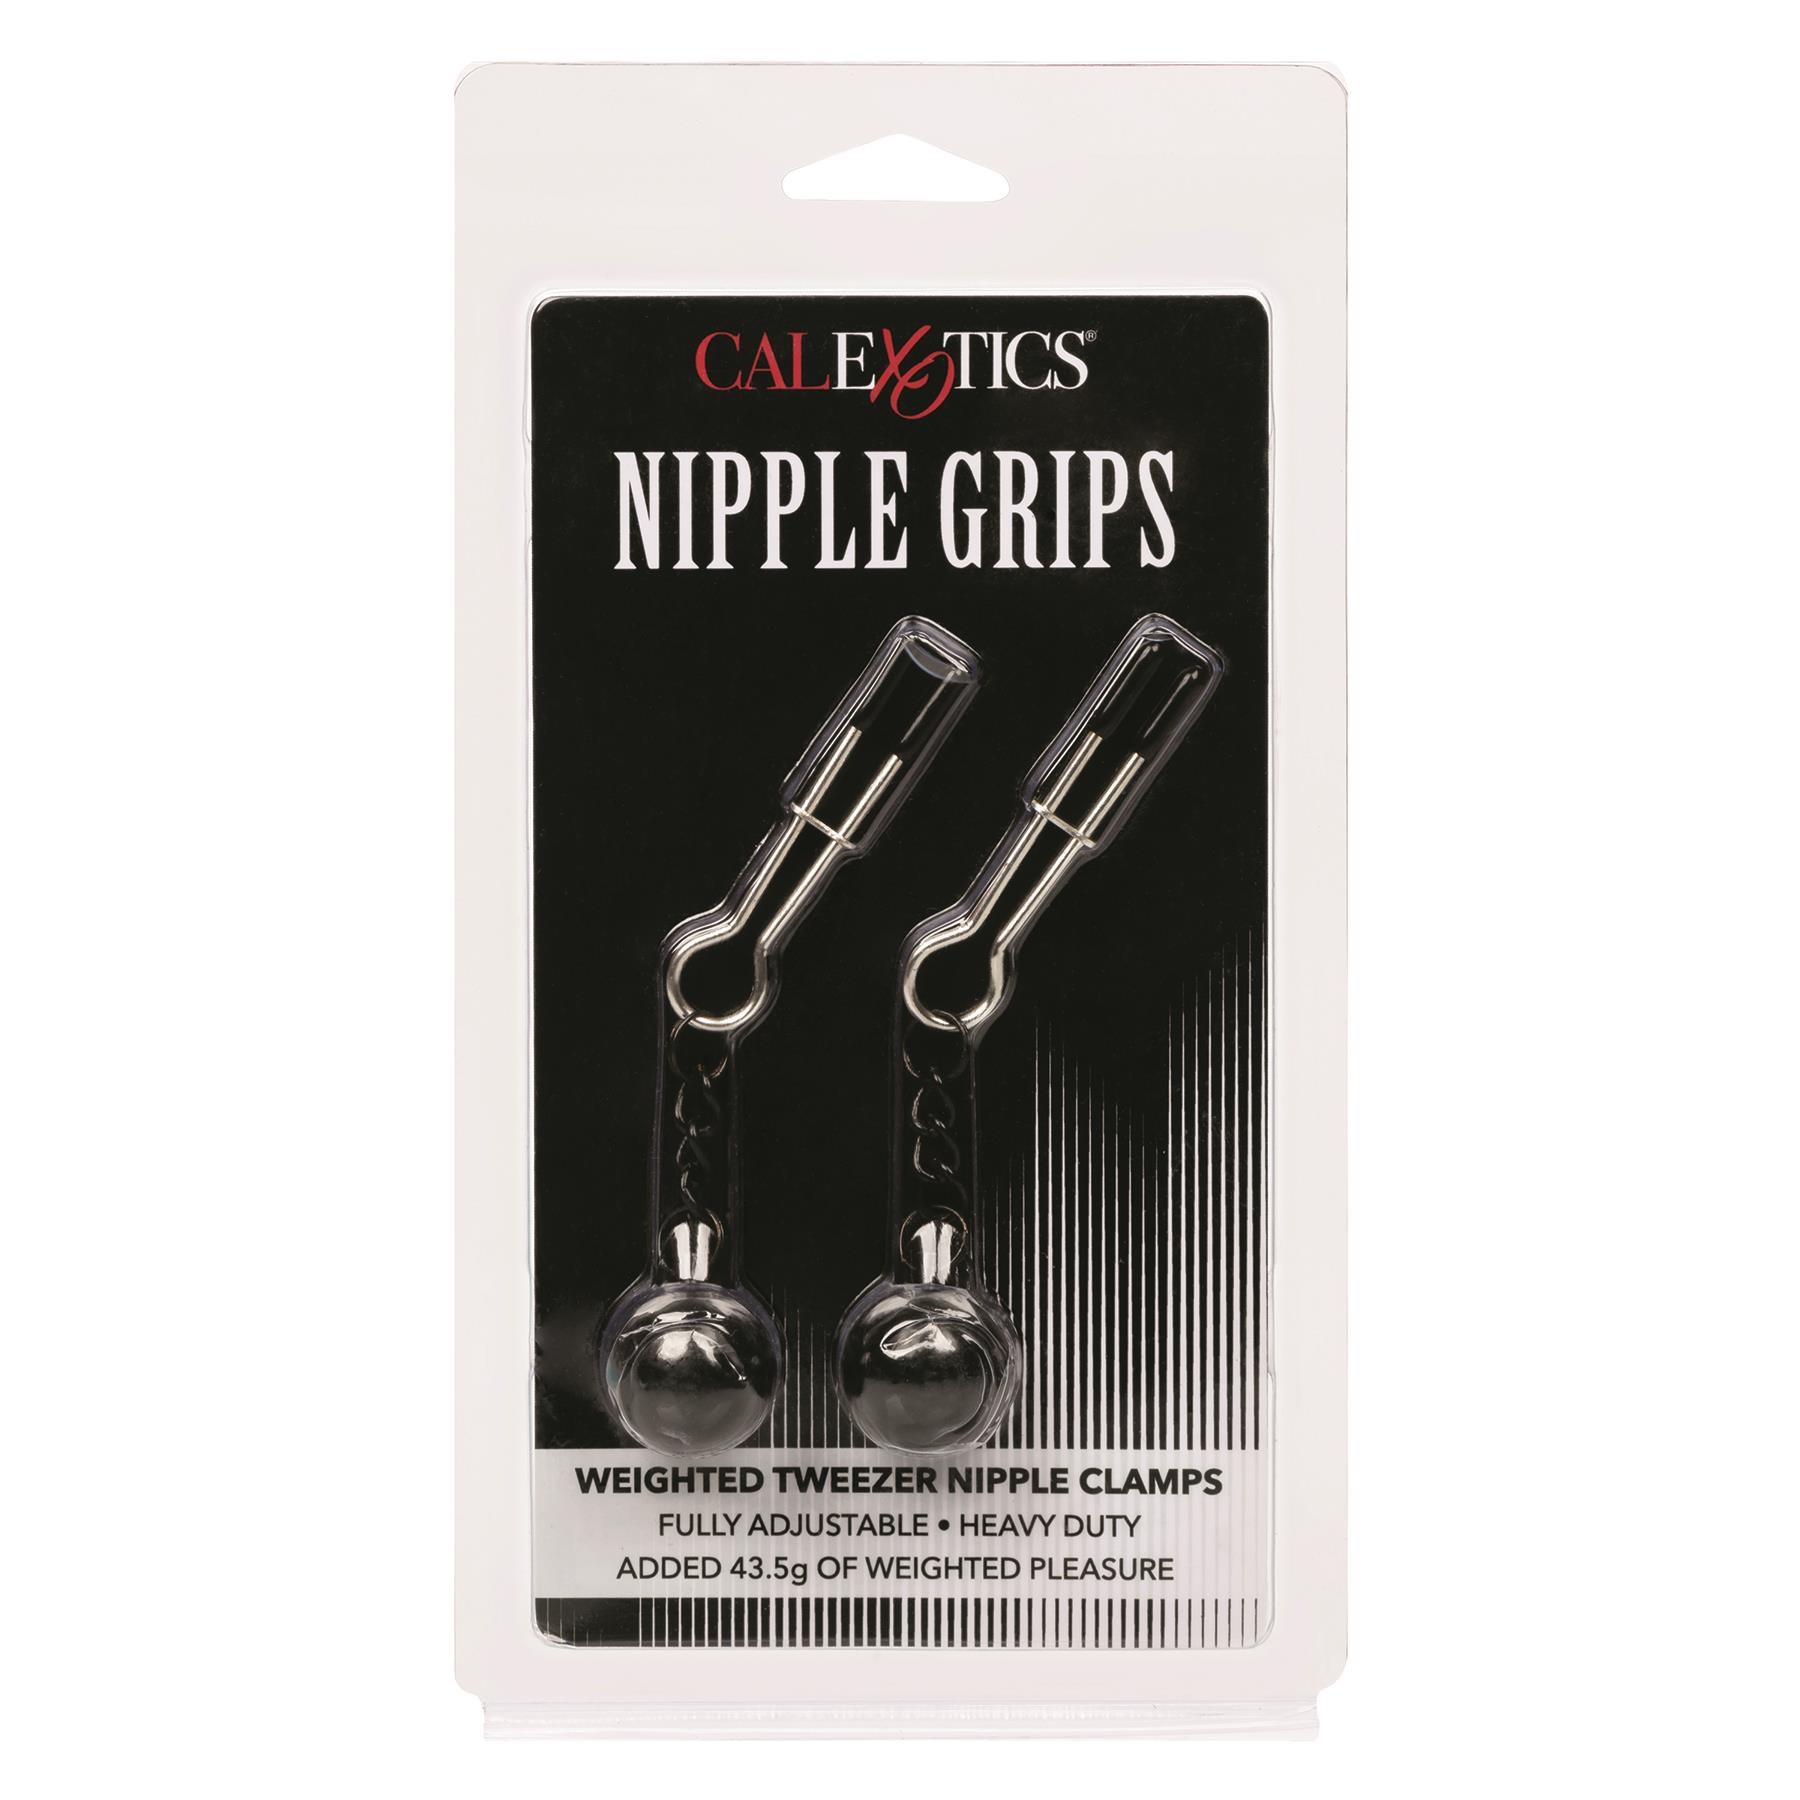 Nipple Grips Weighted Tweezer Nipple Clamps Package Shot